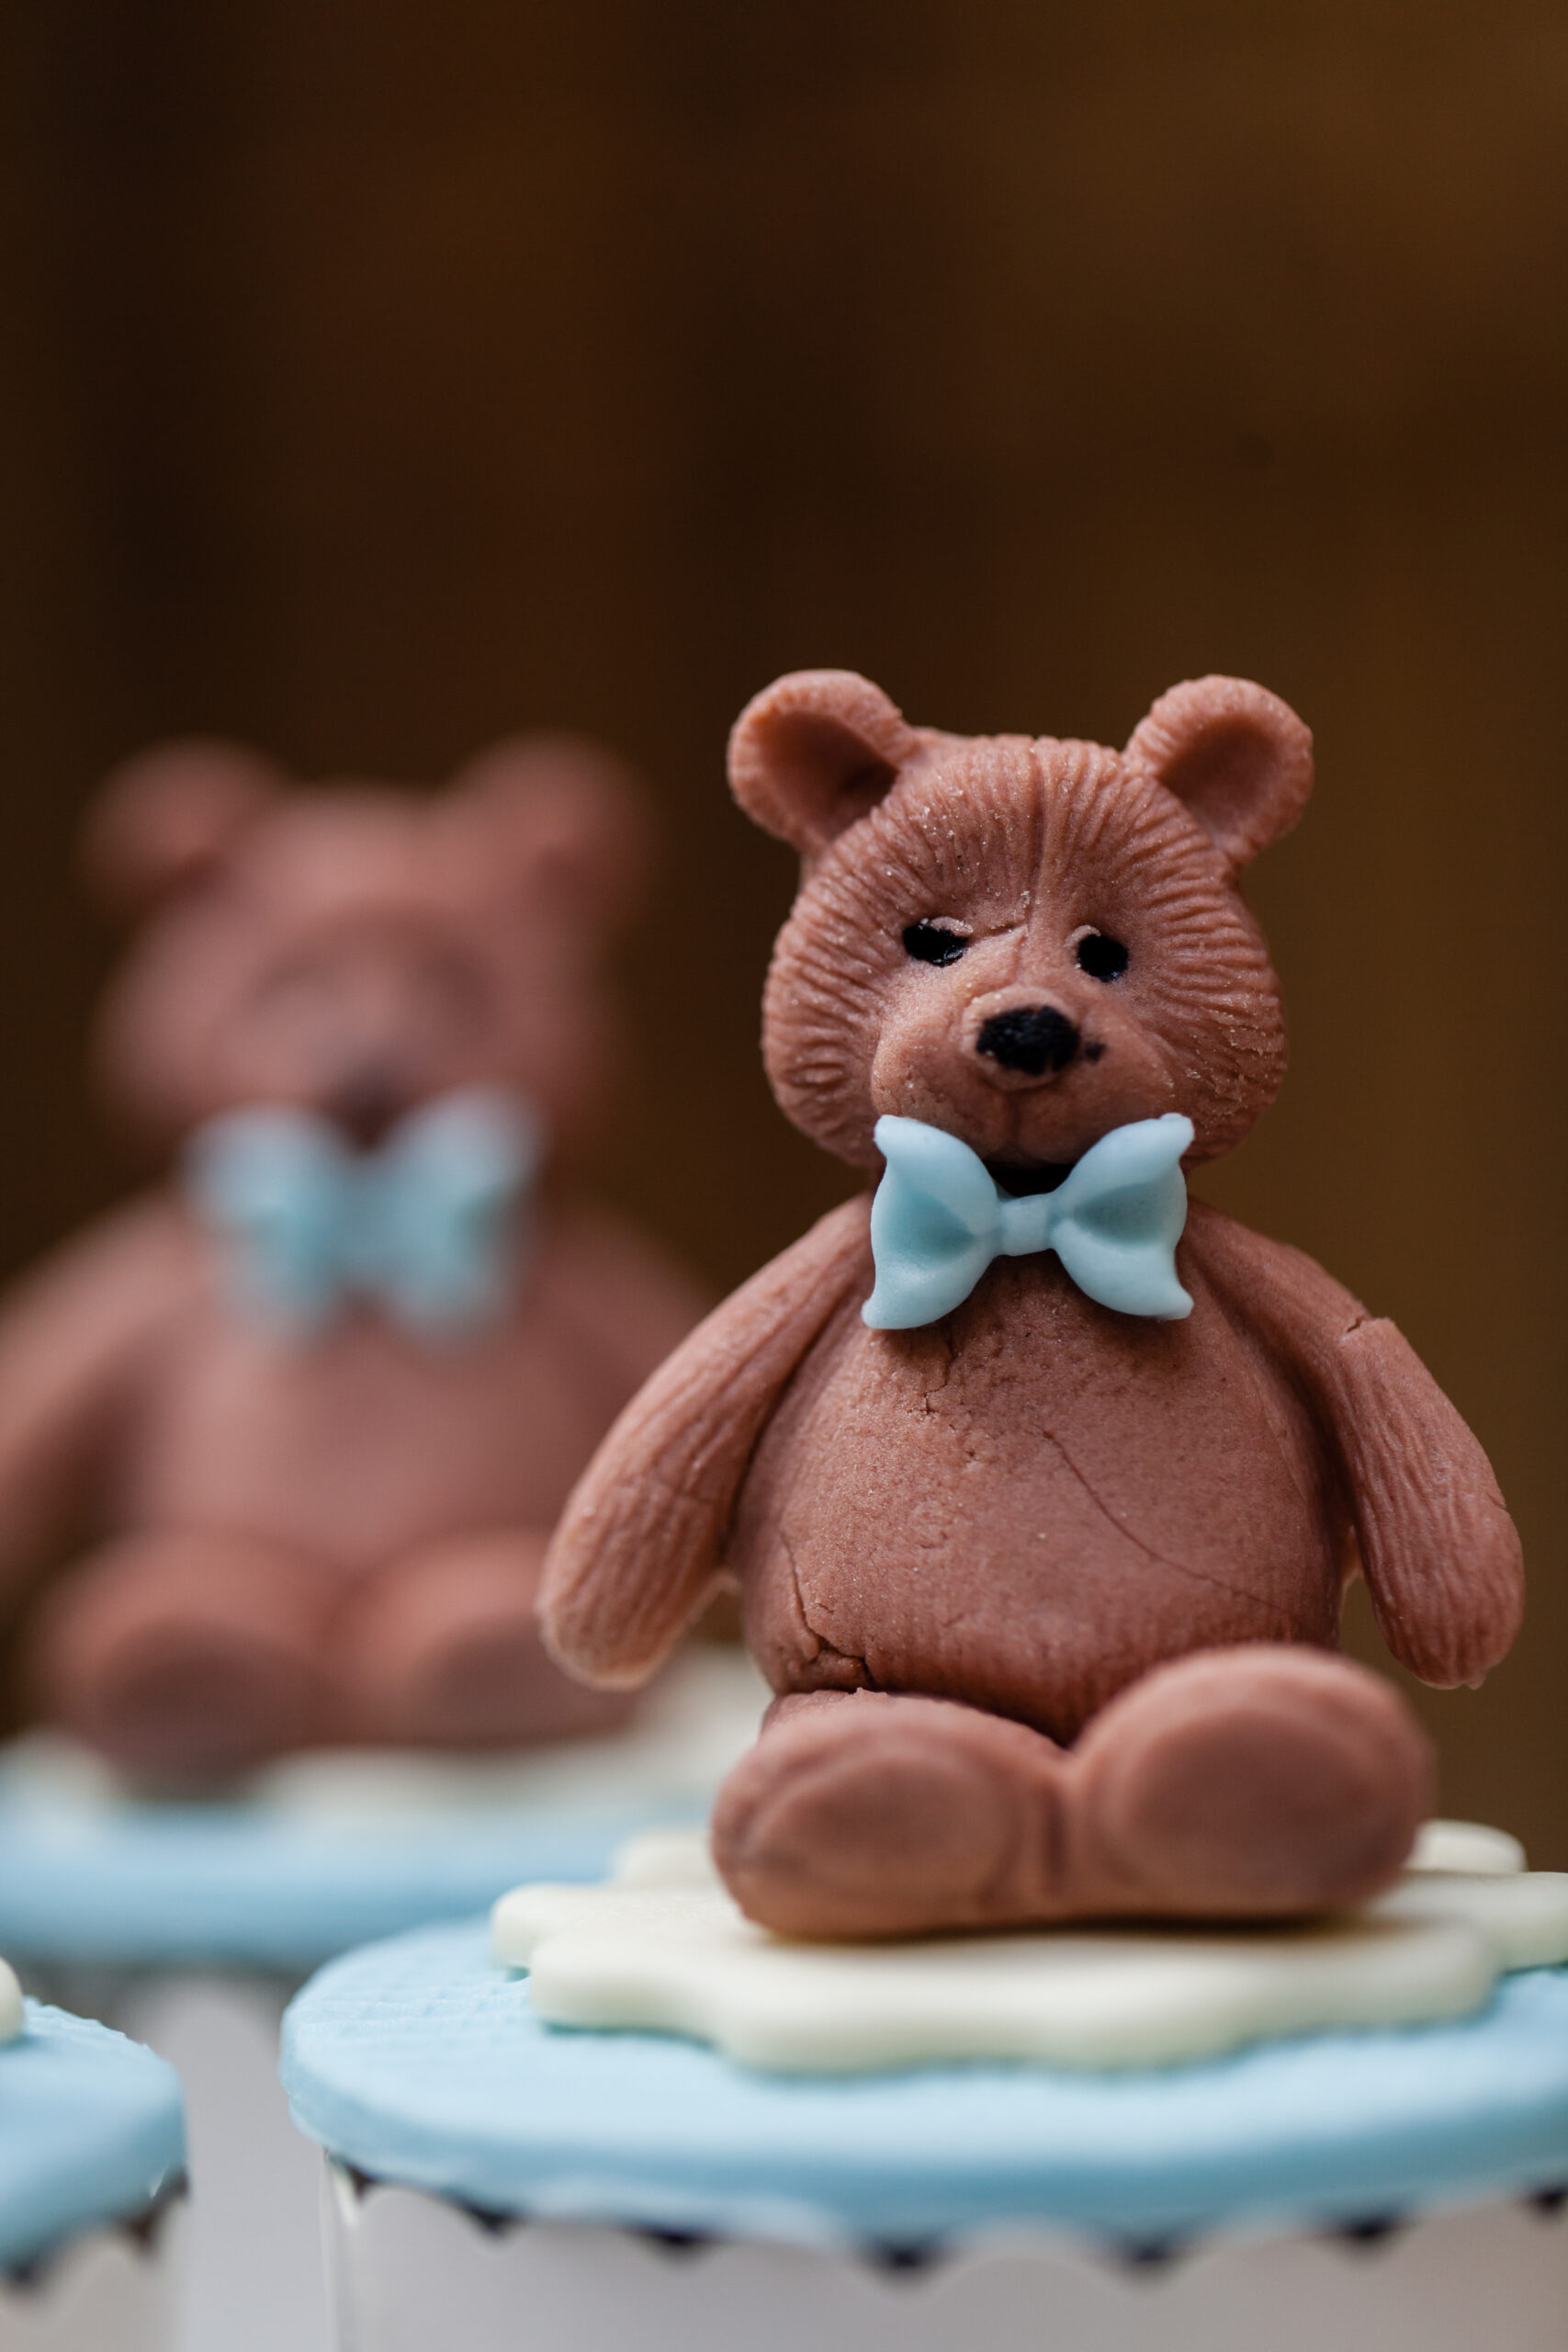 Baby Shower boy Party teddy bear themed cupcakes θεματικά κεράσματα μπισκότα με θέμα το αρκουδάκι